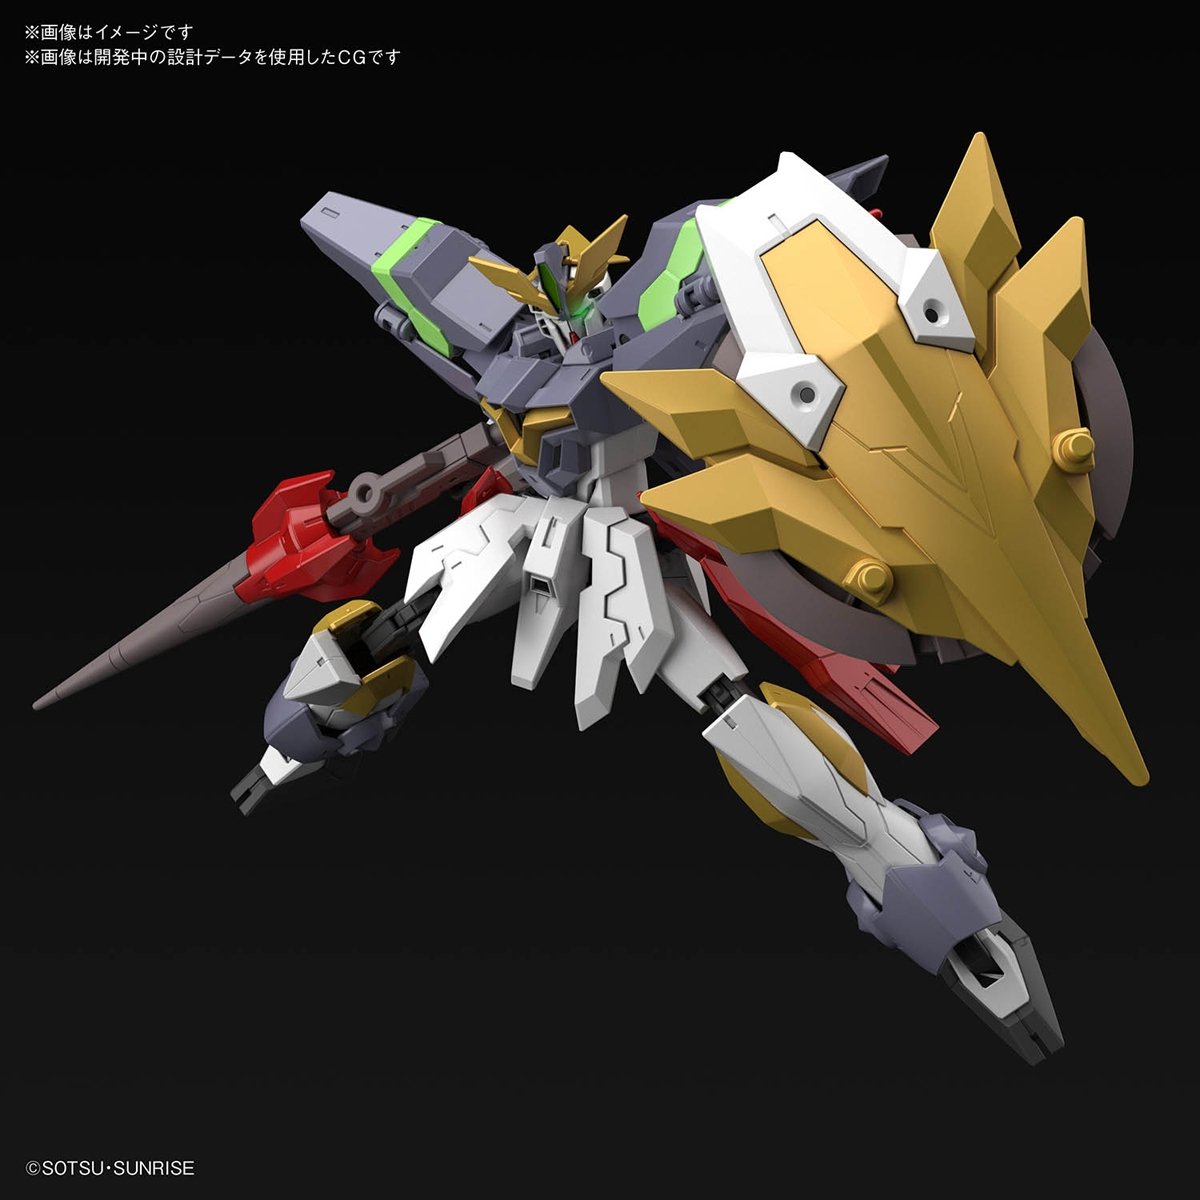 Gunpla HG 1/144 Gundam Aegis Knight-Bandai-Ace Cards &amp; Collectibles